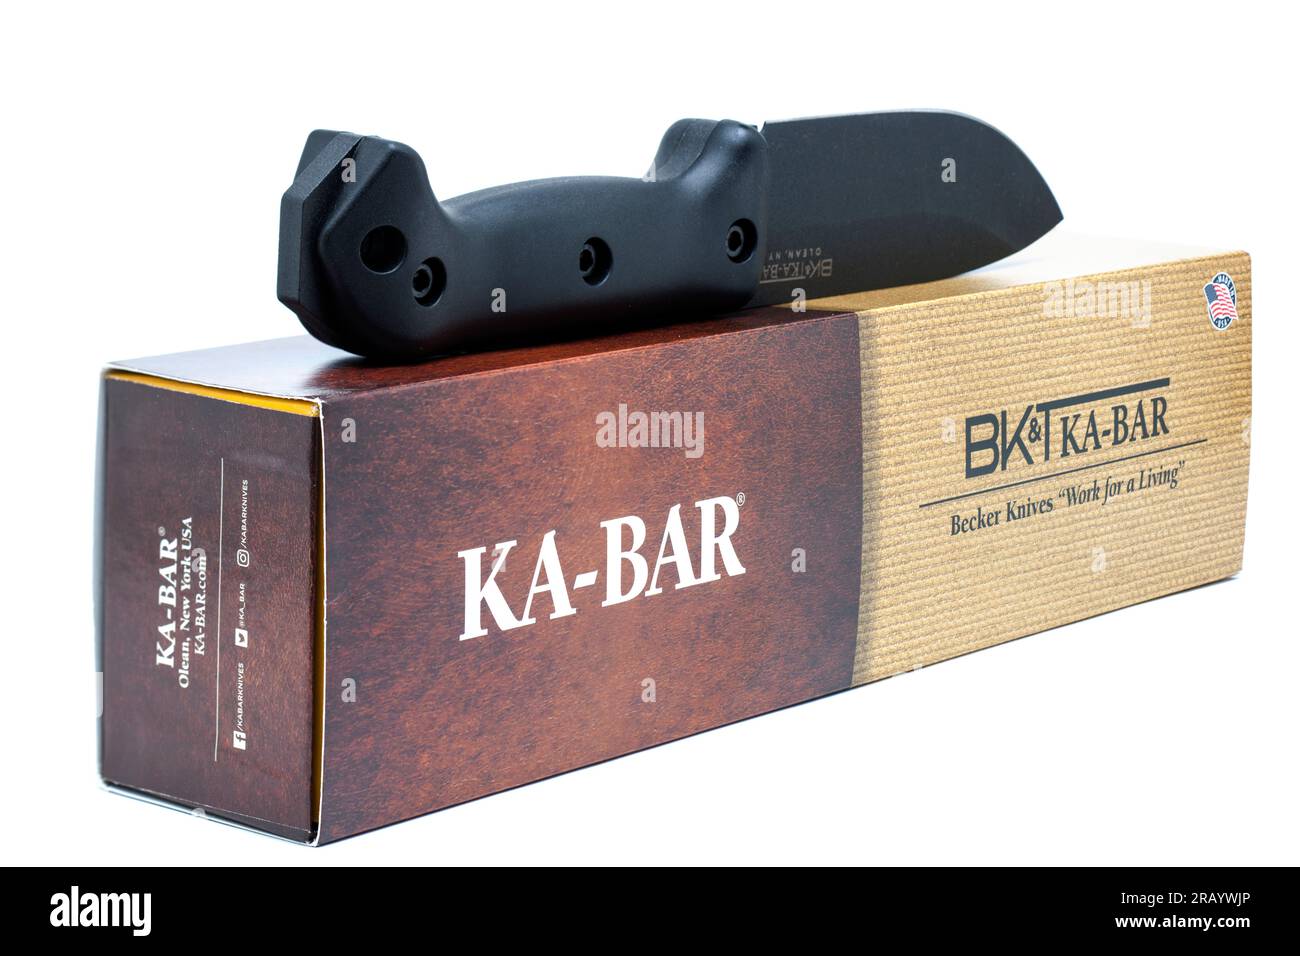 Ka-Bar BK2 Becker Campanion Fixed Blade Bushcraft Knife, Blade is 5.25 inches long, with Box Stock Photo